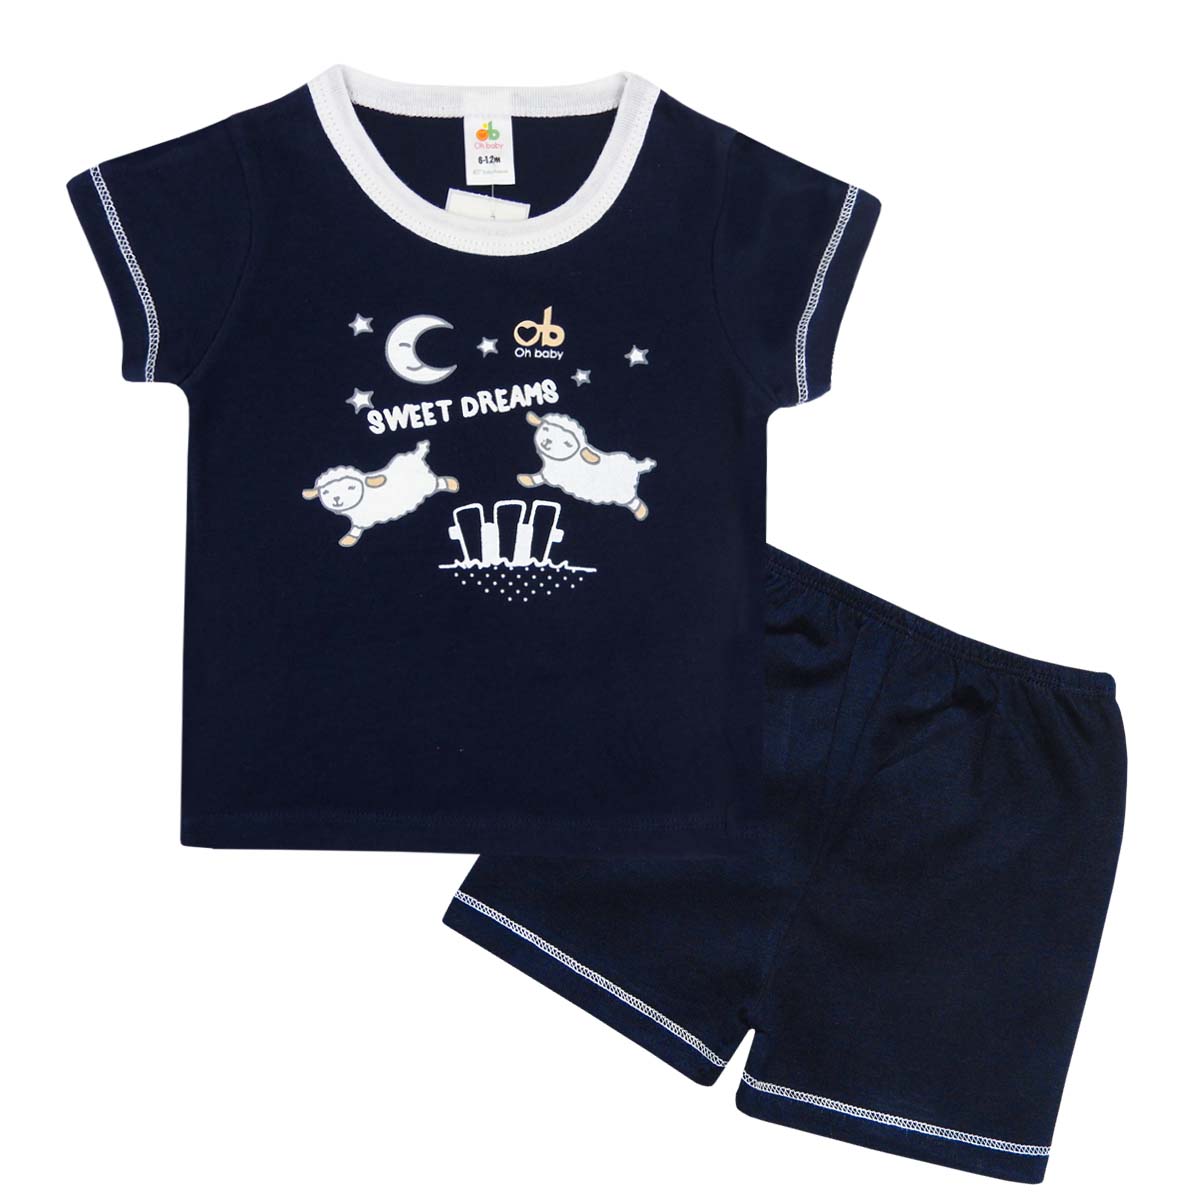 T-shirt set  “Sweet Dreams” – Navy